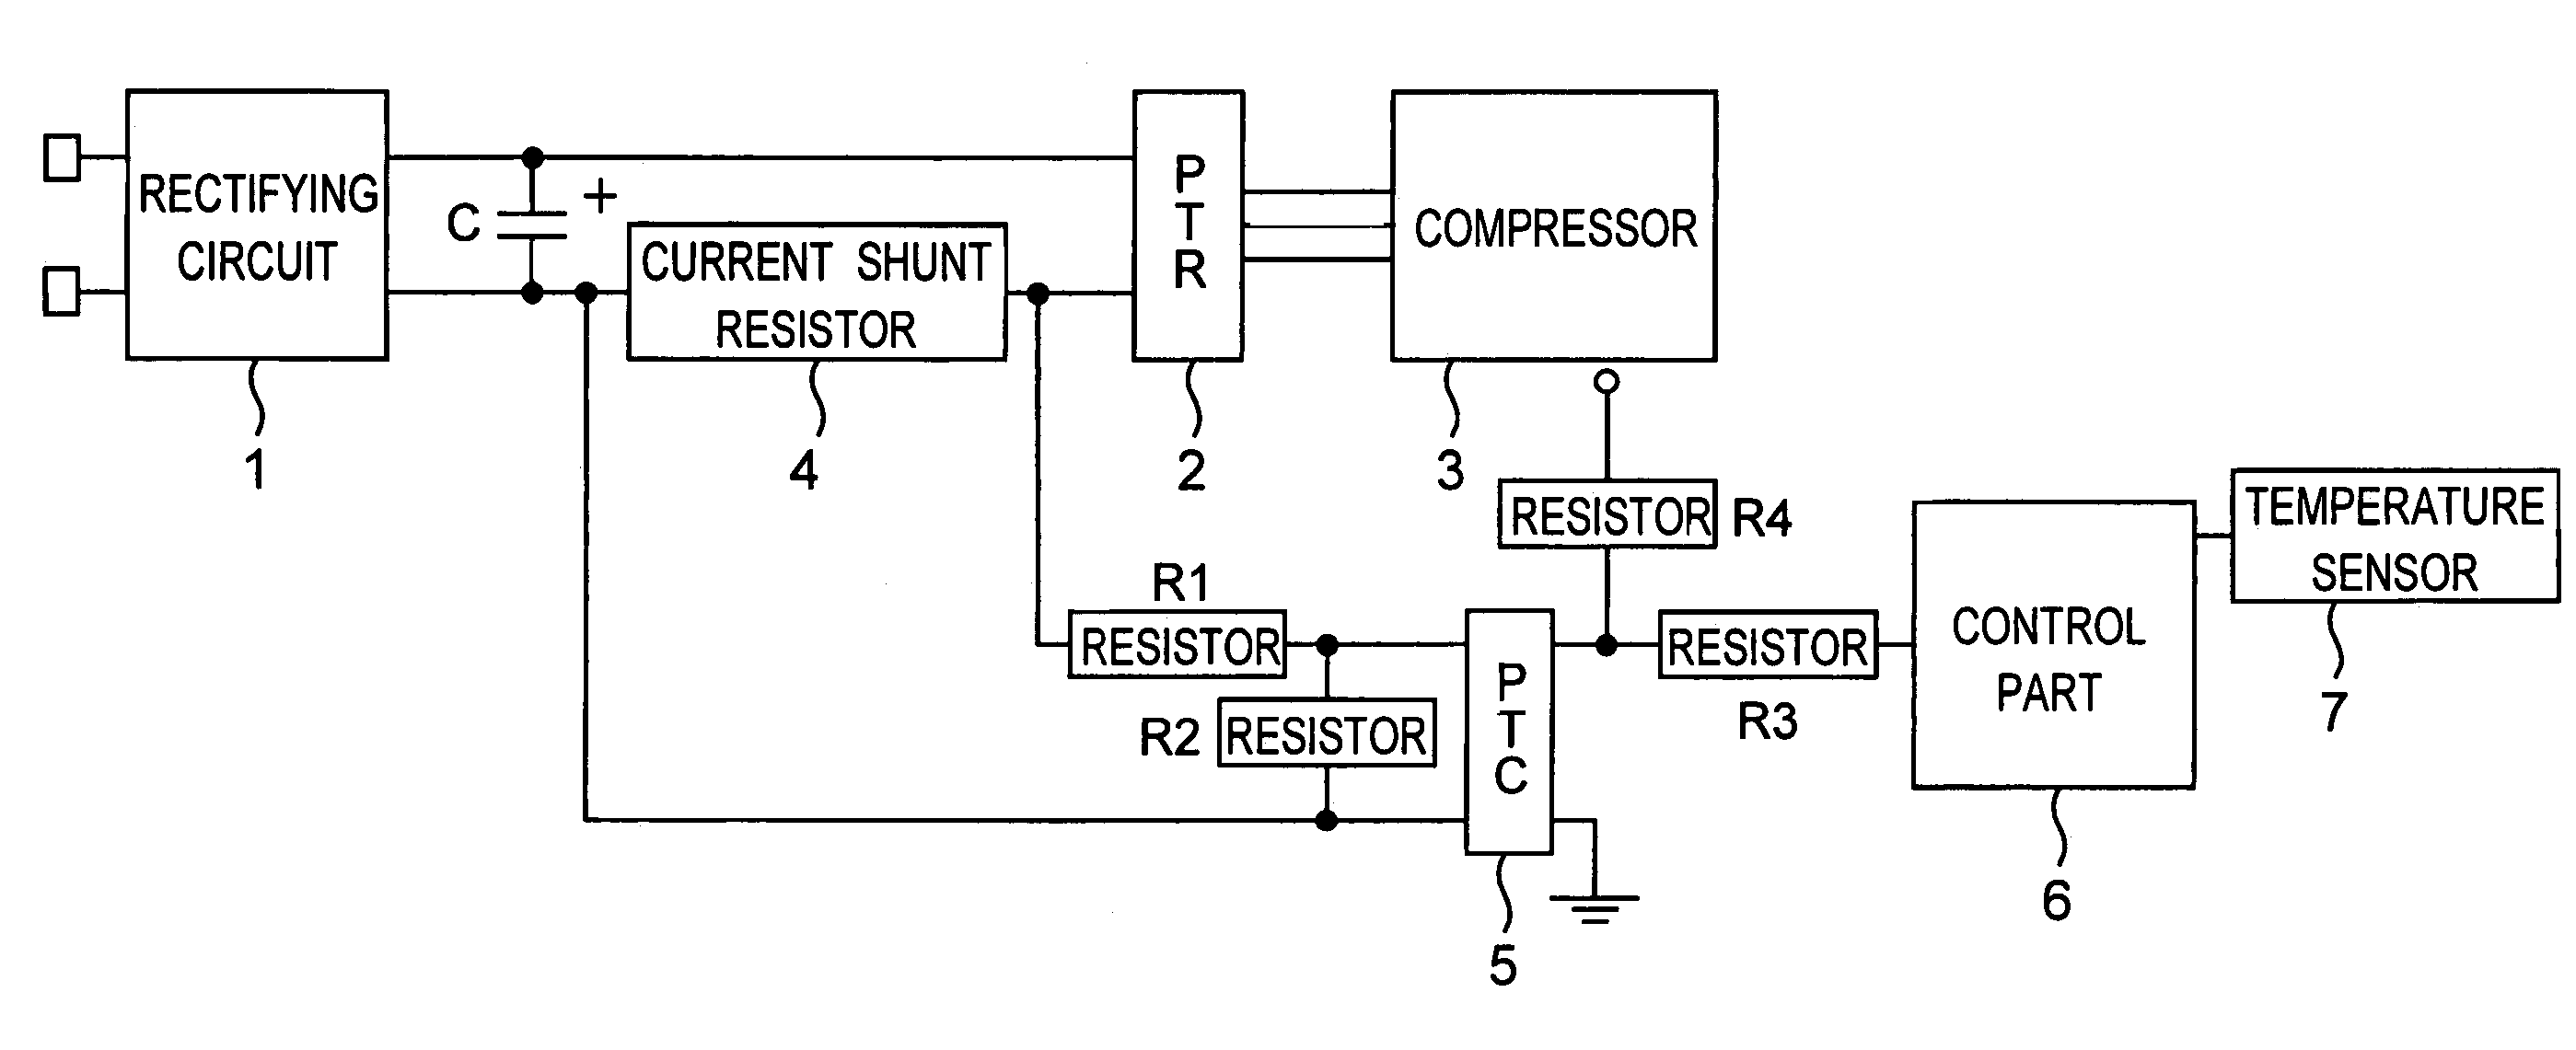 Compressor unit and refrigerator using the unit